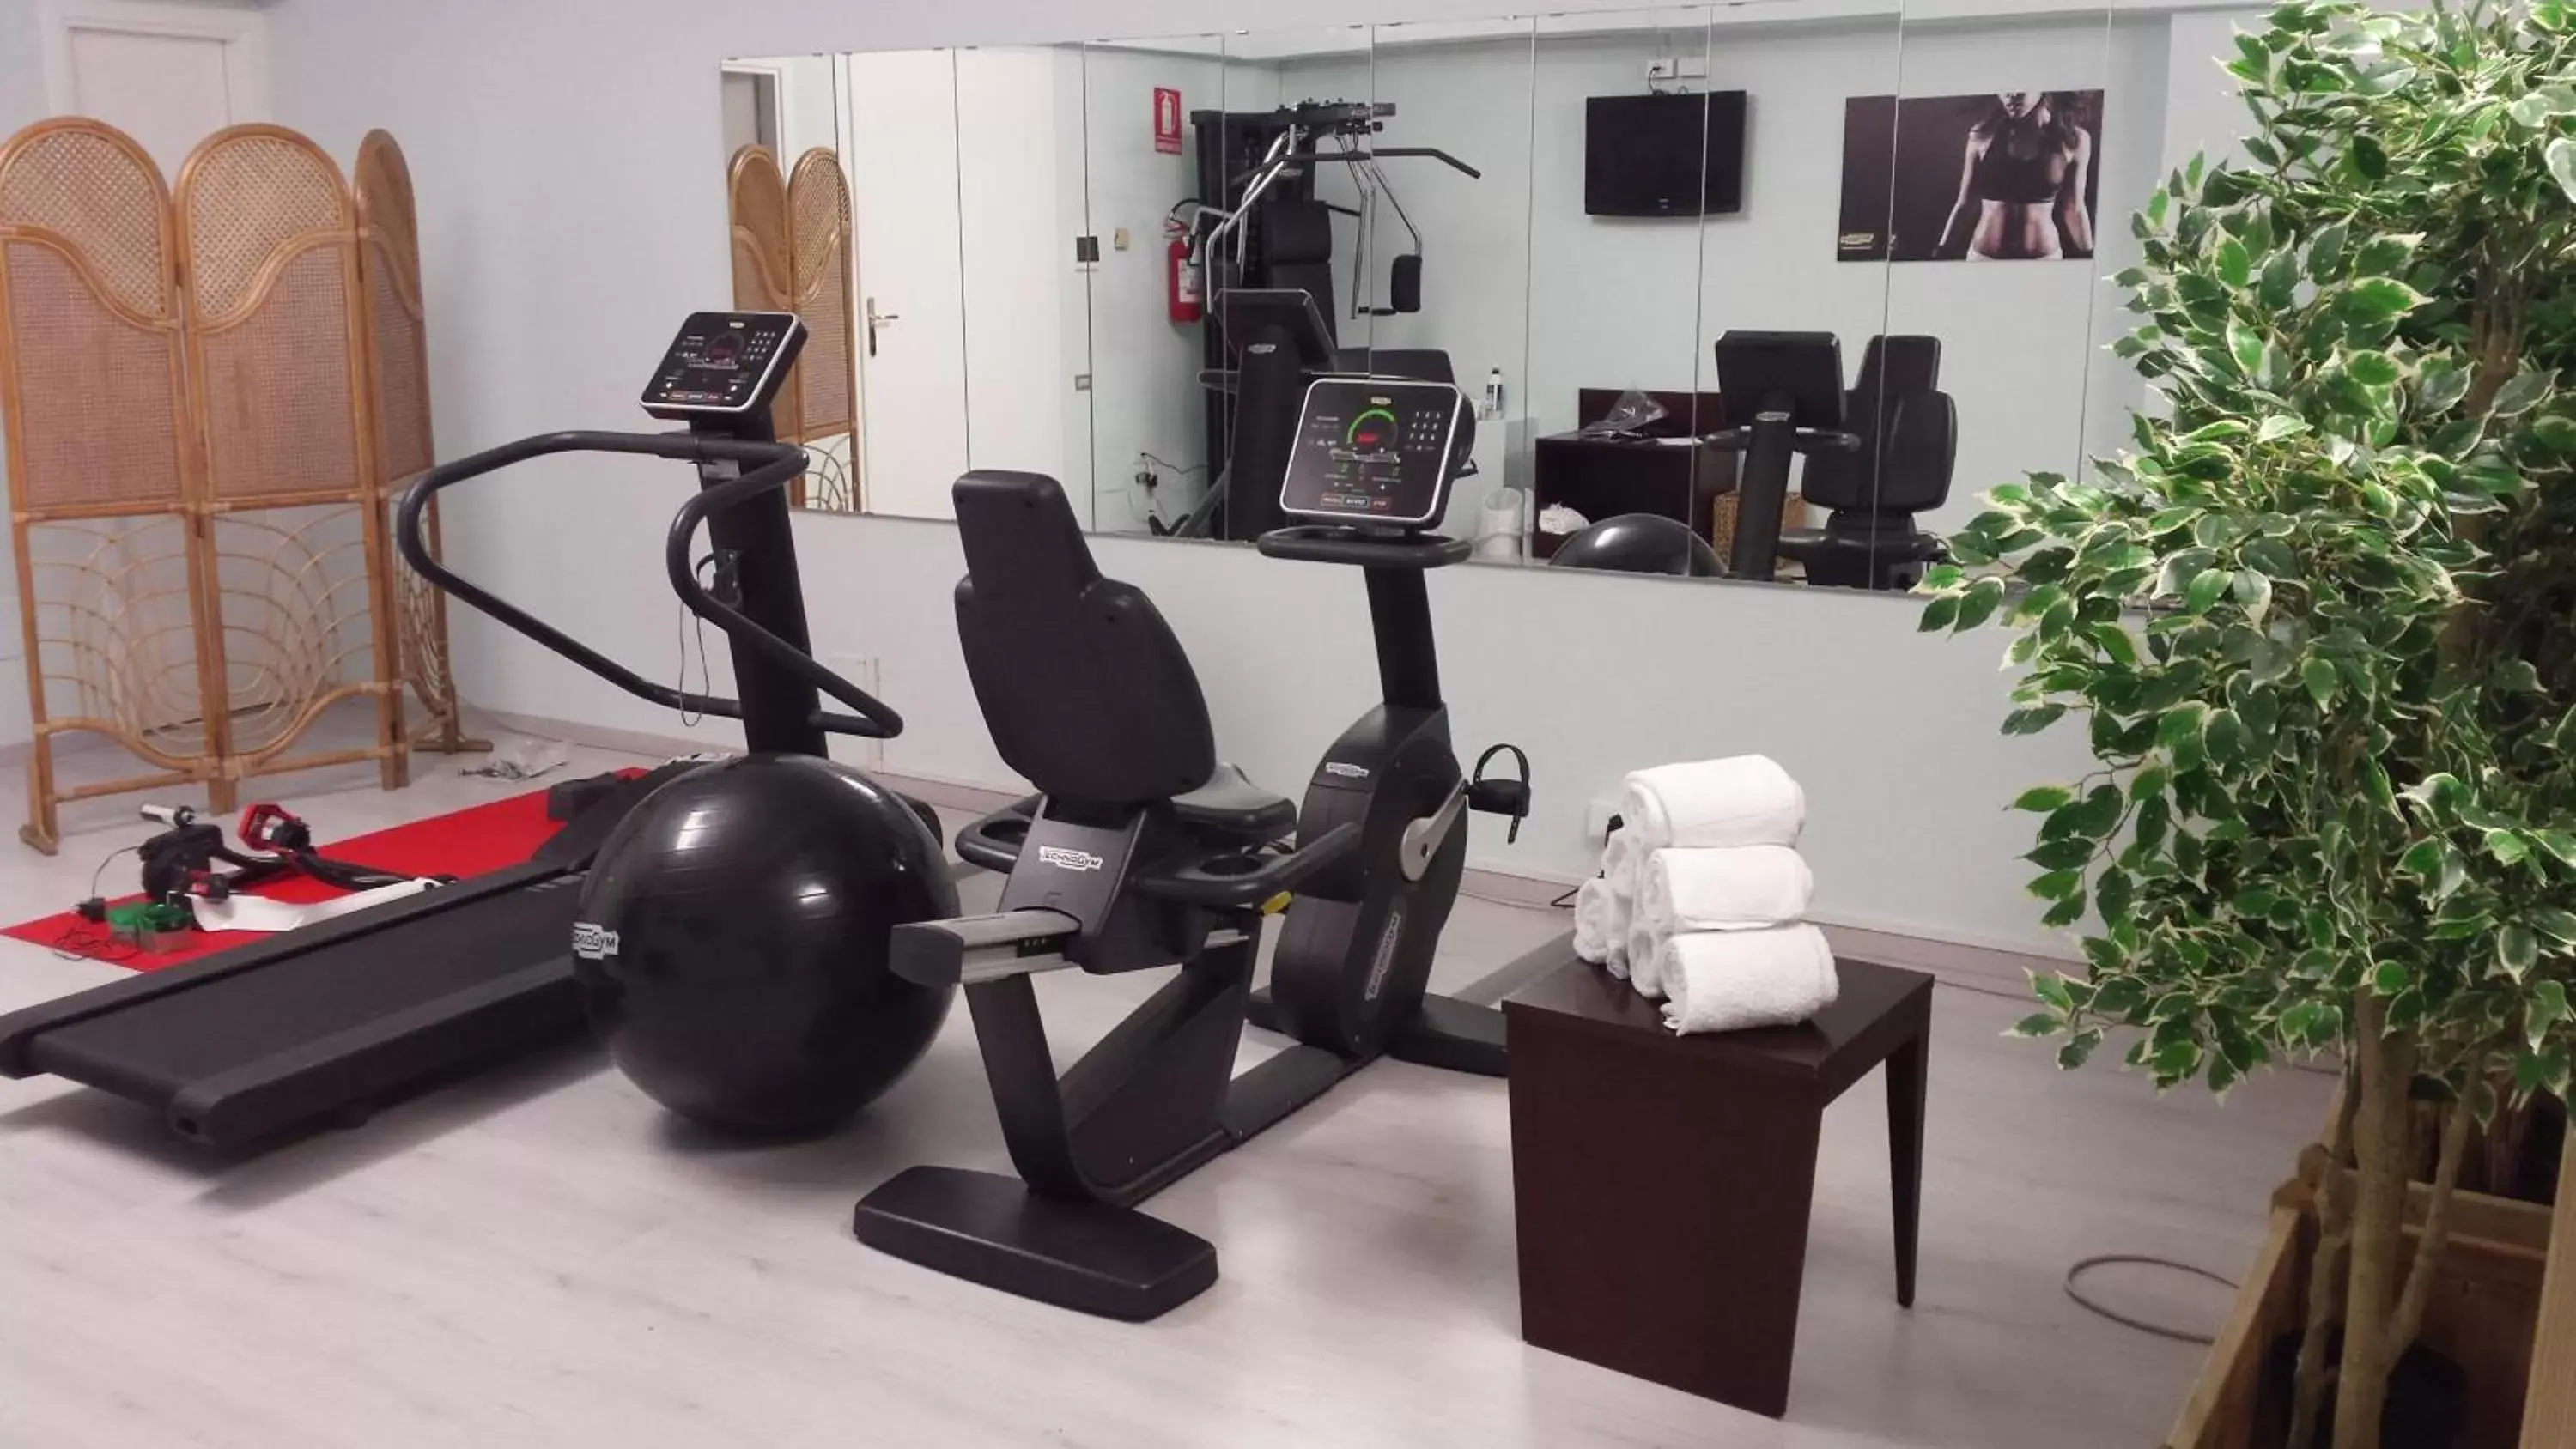 Fitness centre/facilities, Fitness Center/Facilities in Hotel Residence Esplanade